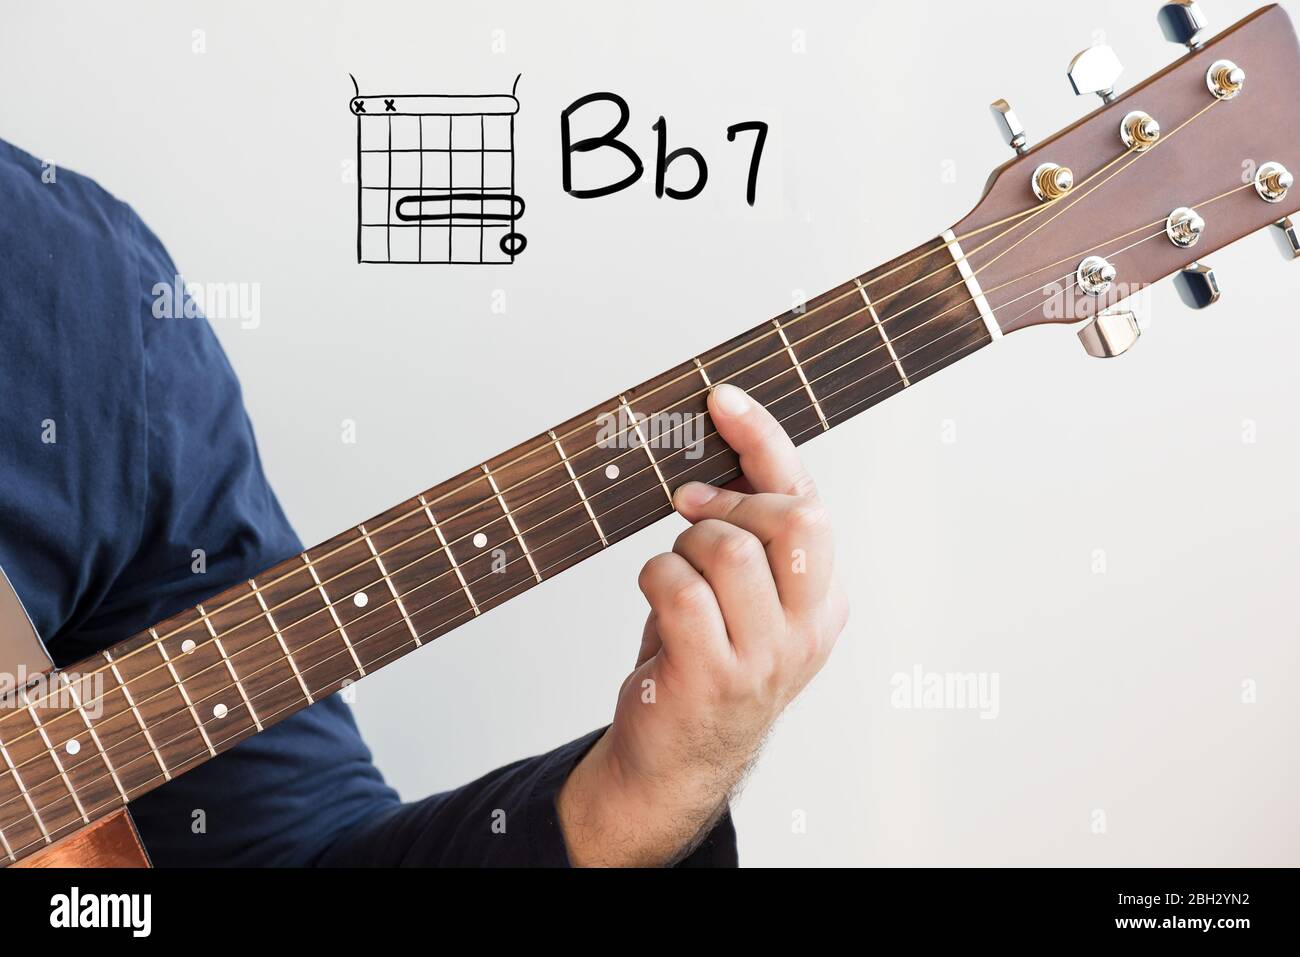 Learn Guitar - Man in a dark blue shirt playing guitar chords displayed on  whiteboard, Chord B flat 7 Stock Photo - Alamy